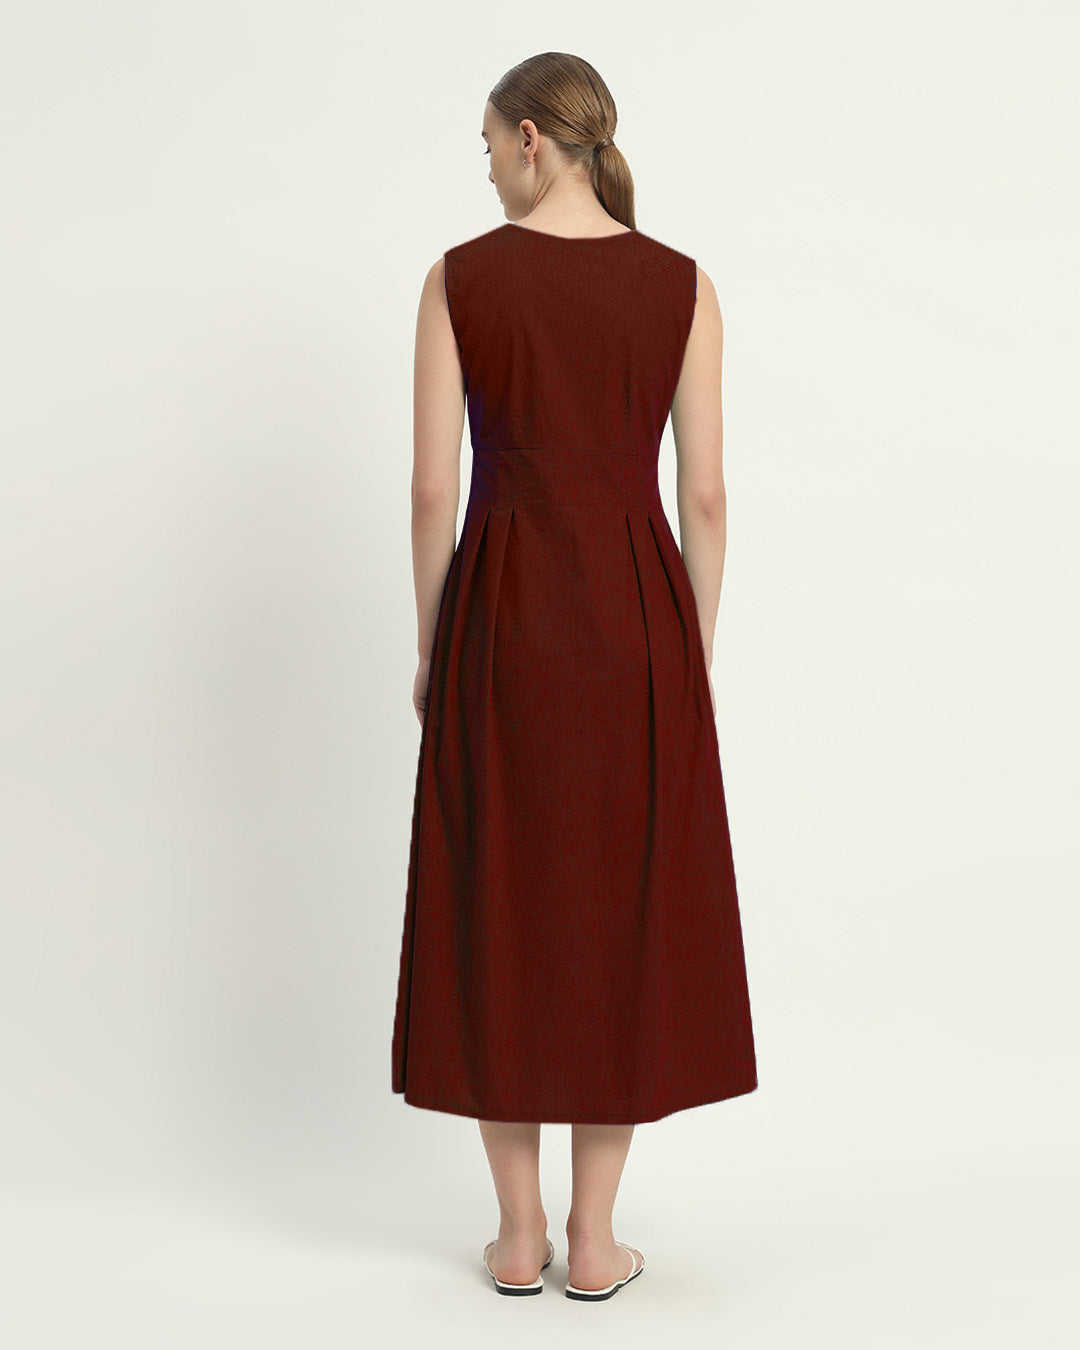 The Mendoza Rouge Cotton Dress